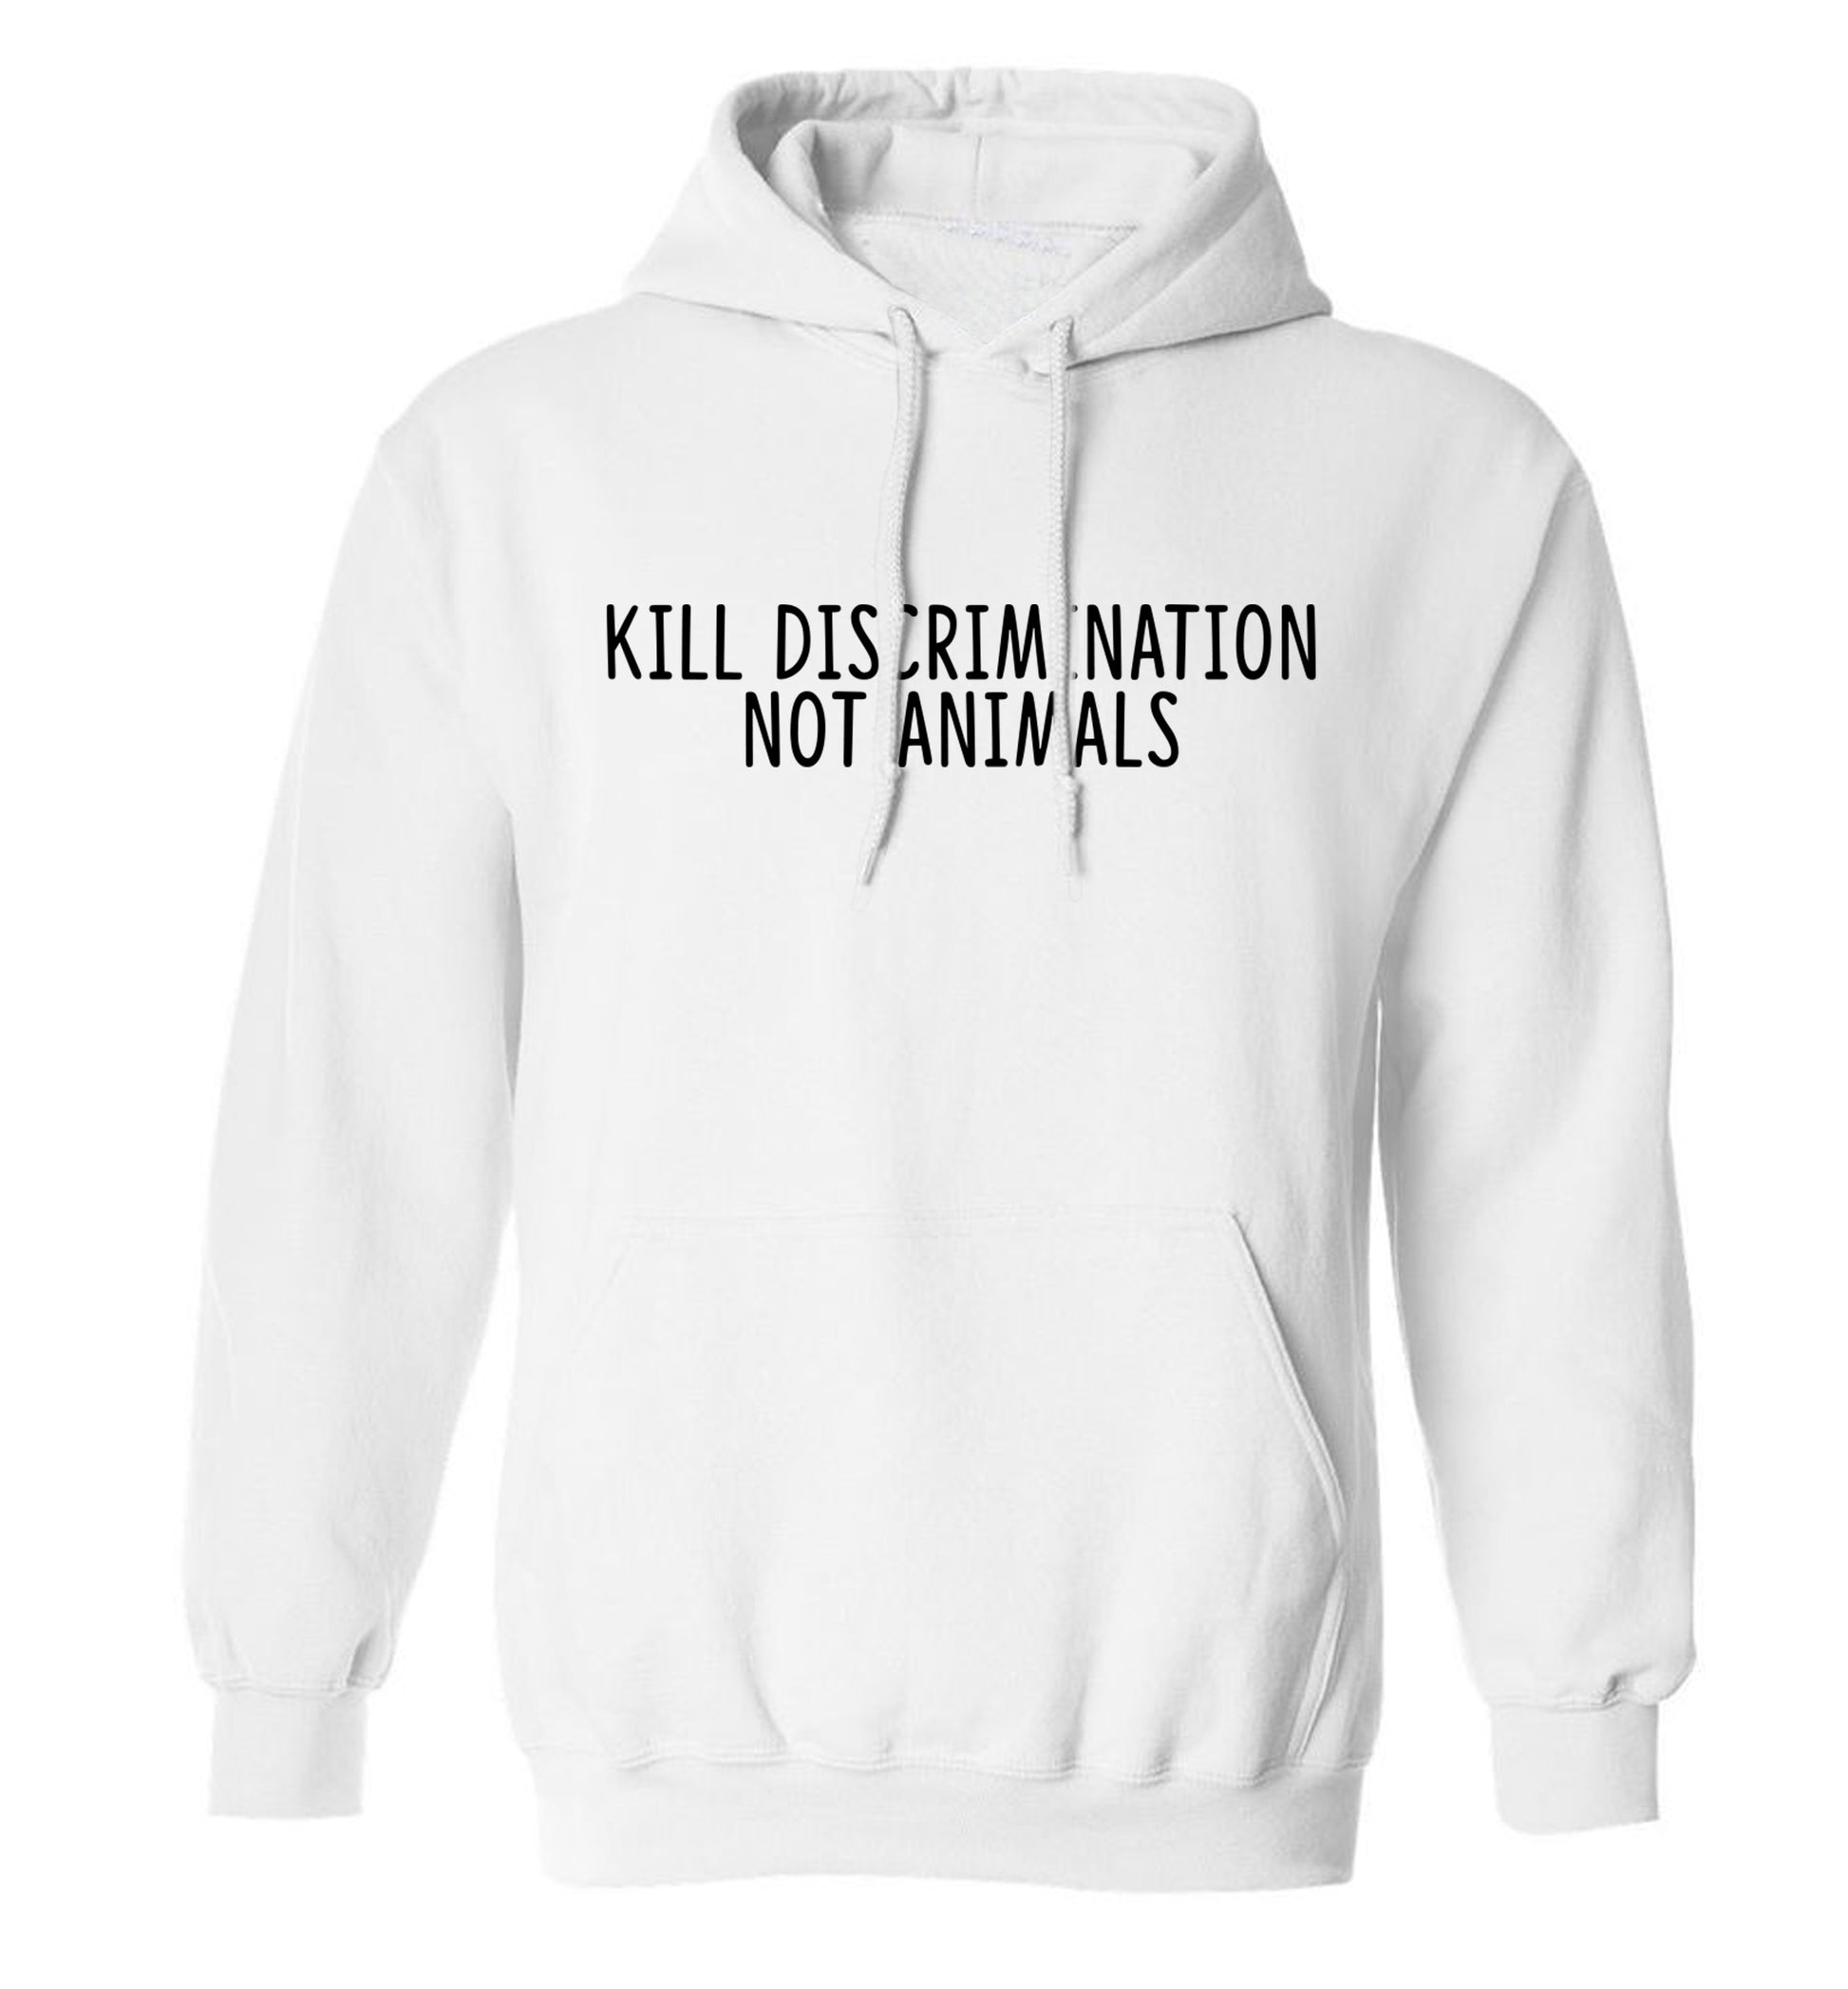 Kill Discrimination Not Animals adults unisex white hoodie 2XL